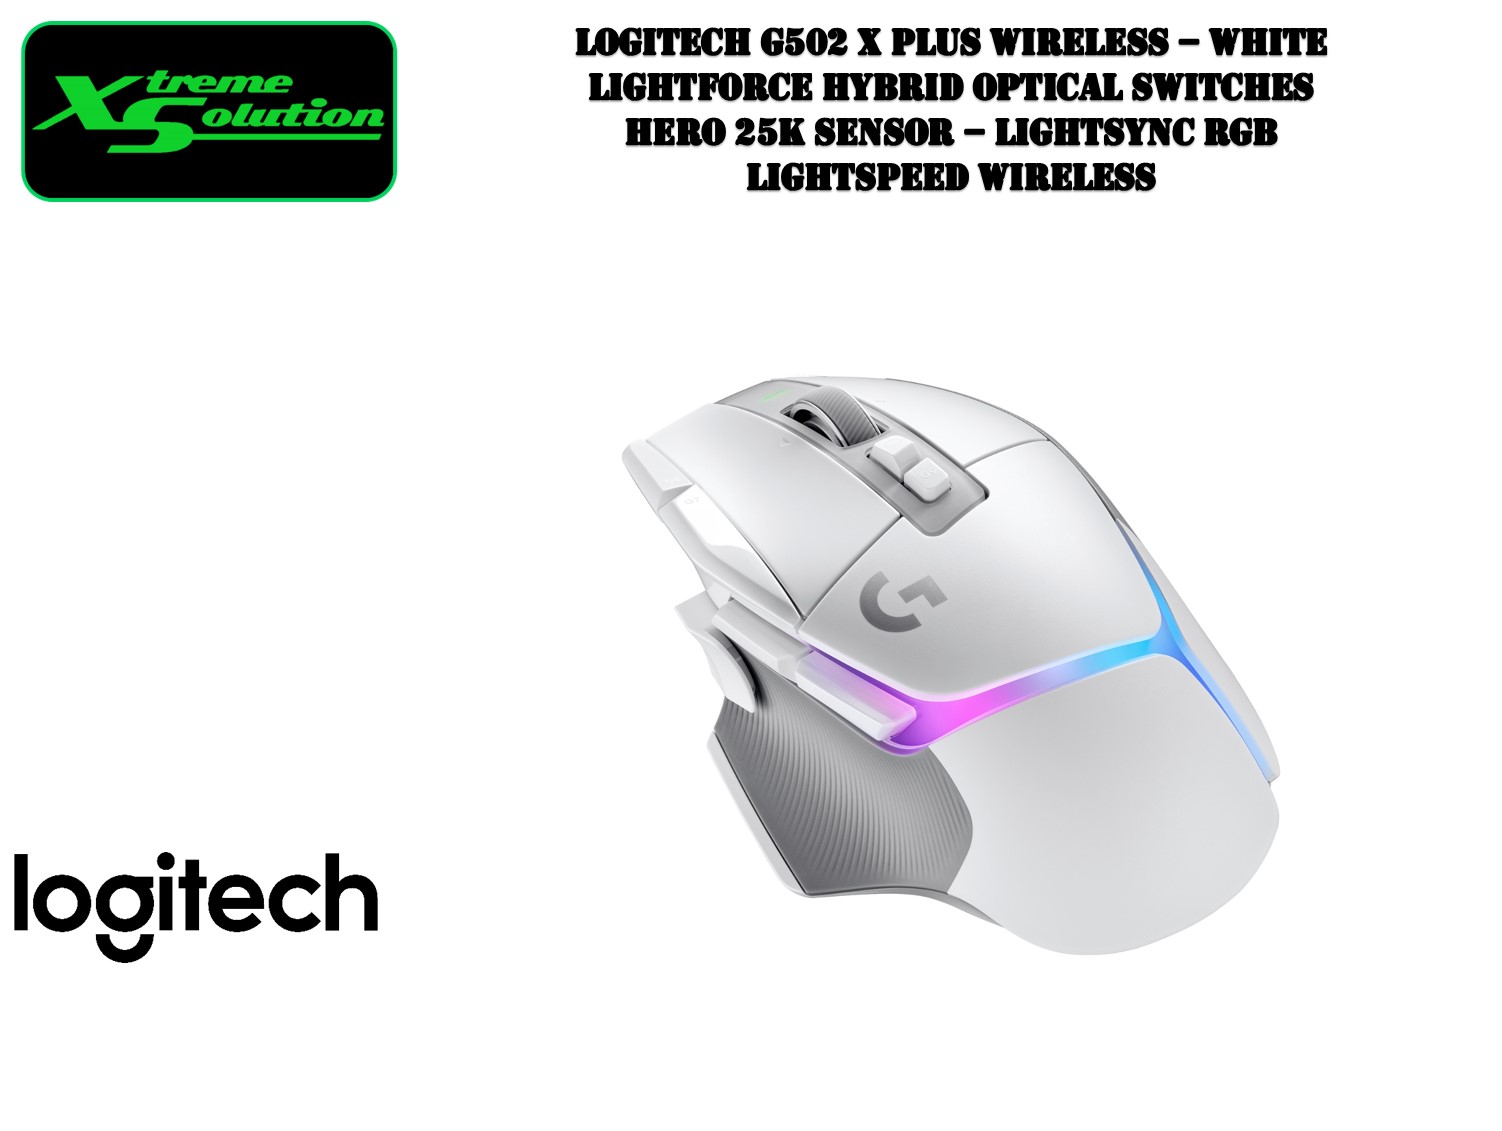 Logitech G502 X Plus Wireless (Black / White) - Lightforce Hybrid